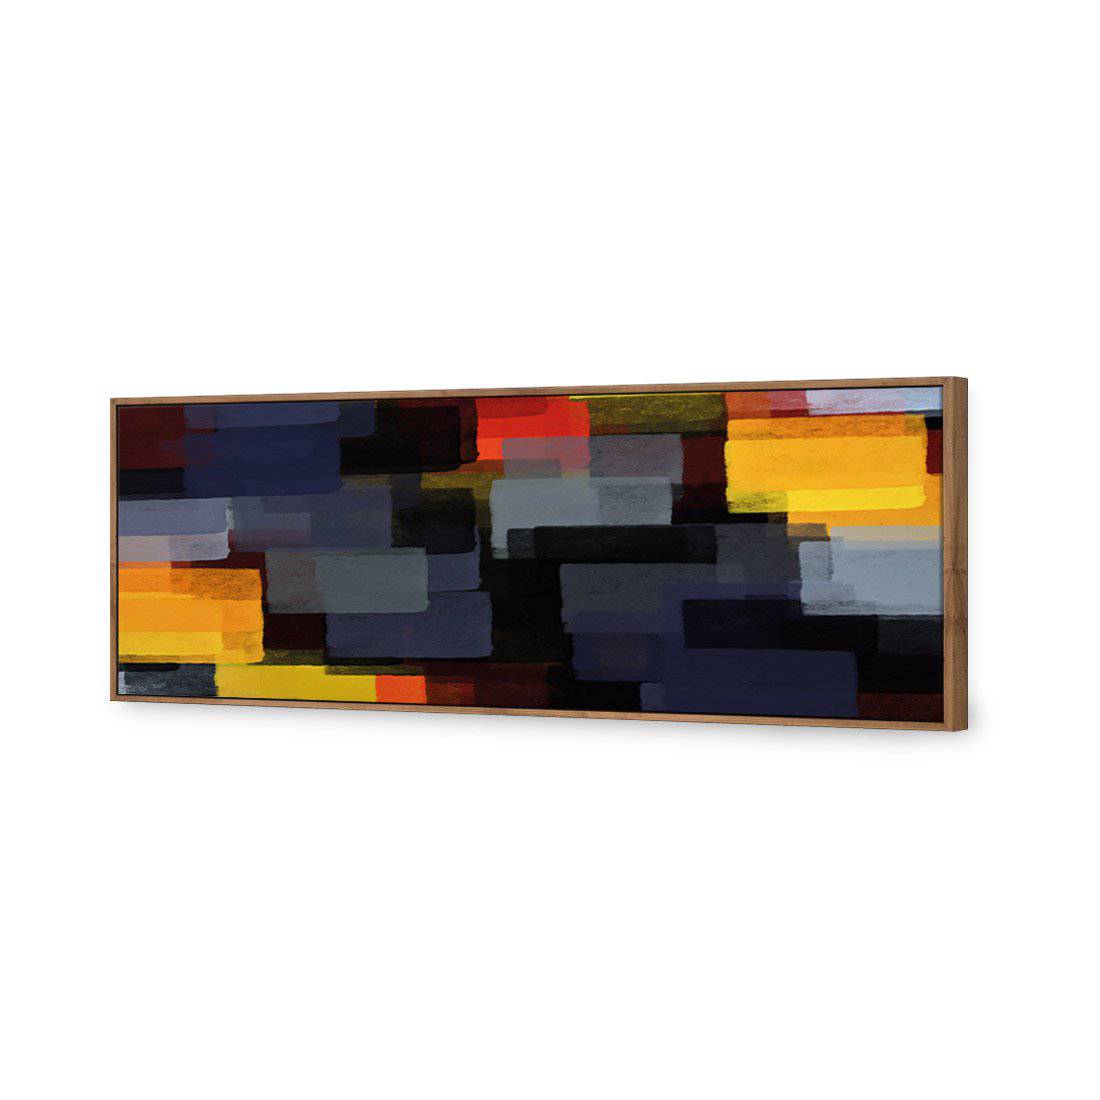 Colliding Blocks Canvas Art-Canvas-Wall Art Designs-60x20cm-Canvas - Natural Frame-Wall Art Designs